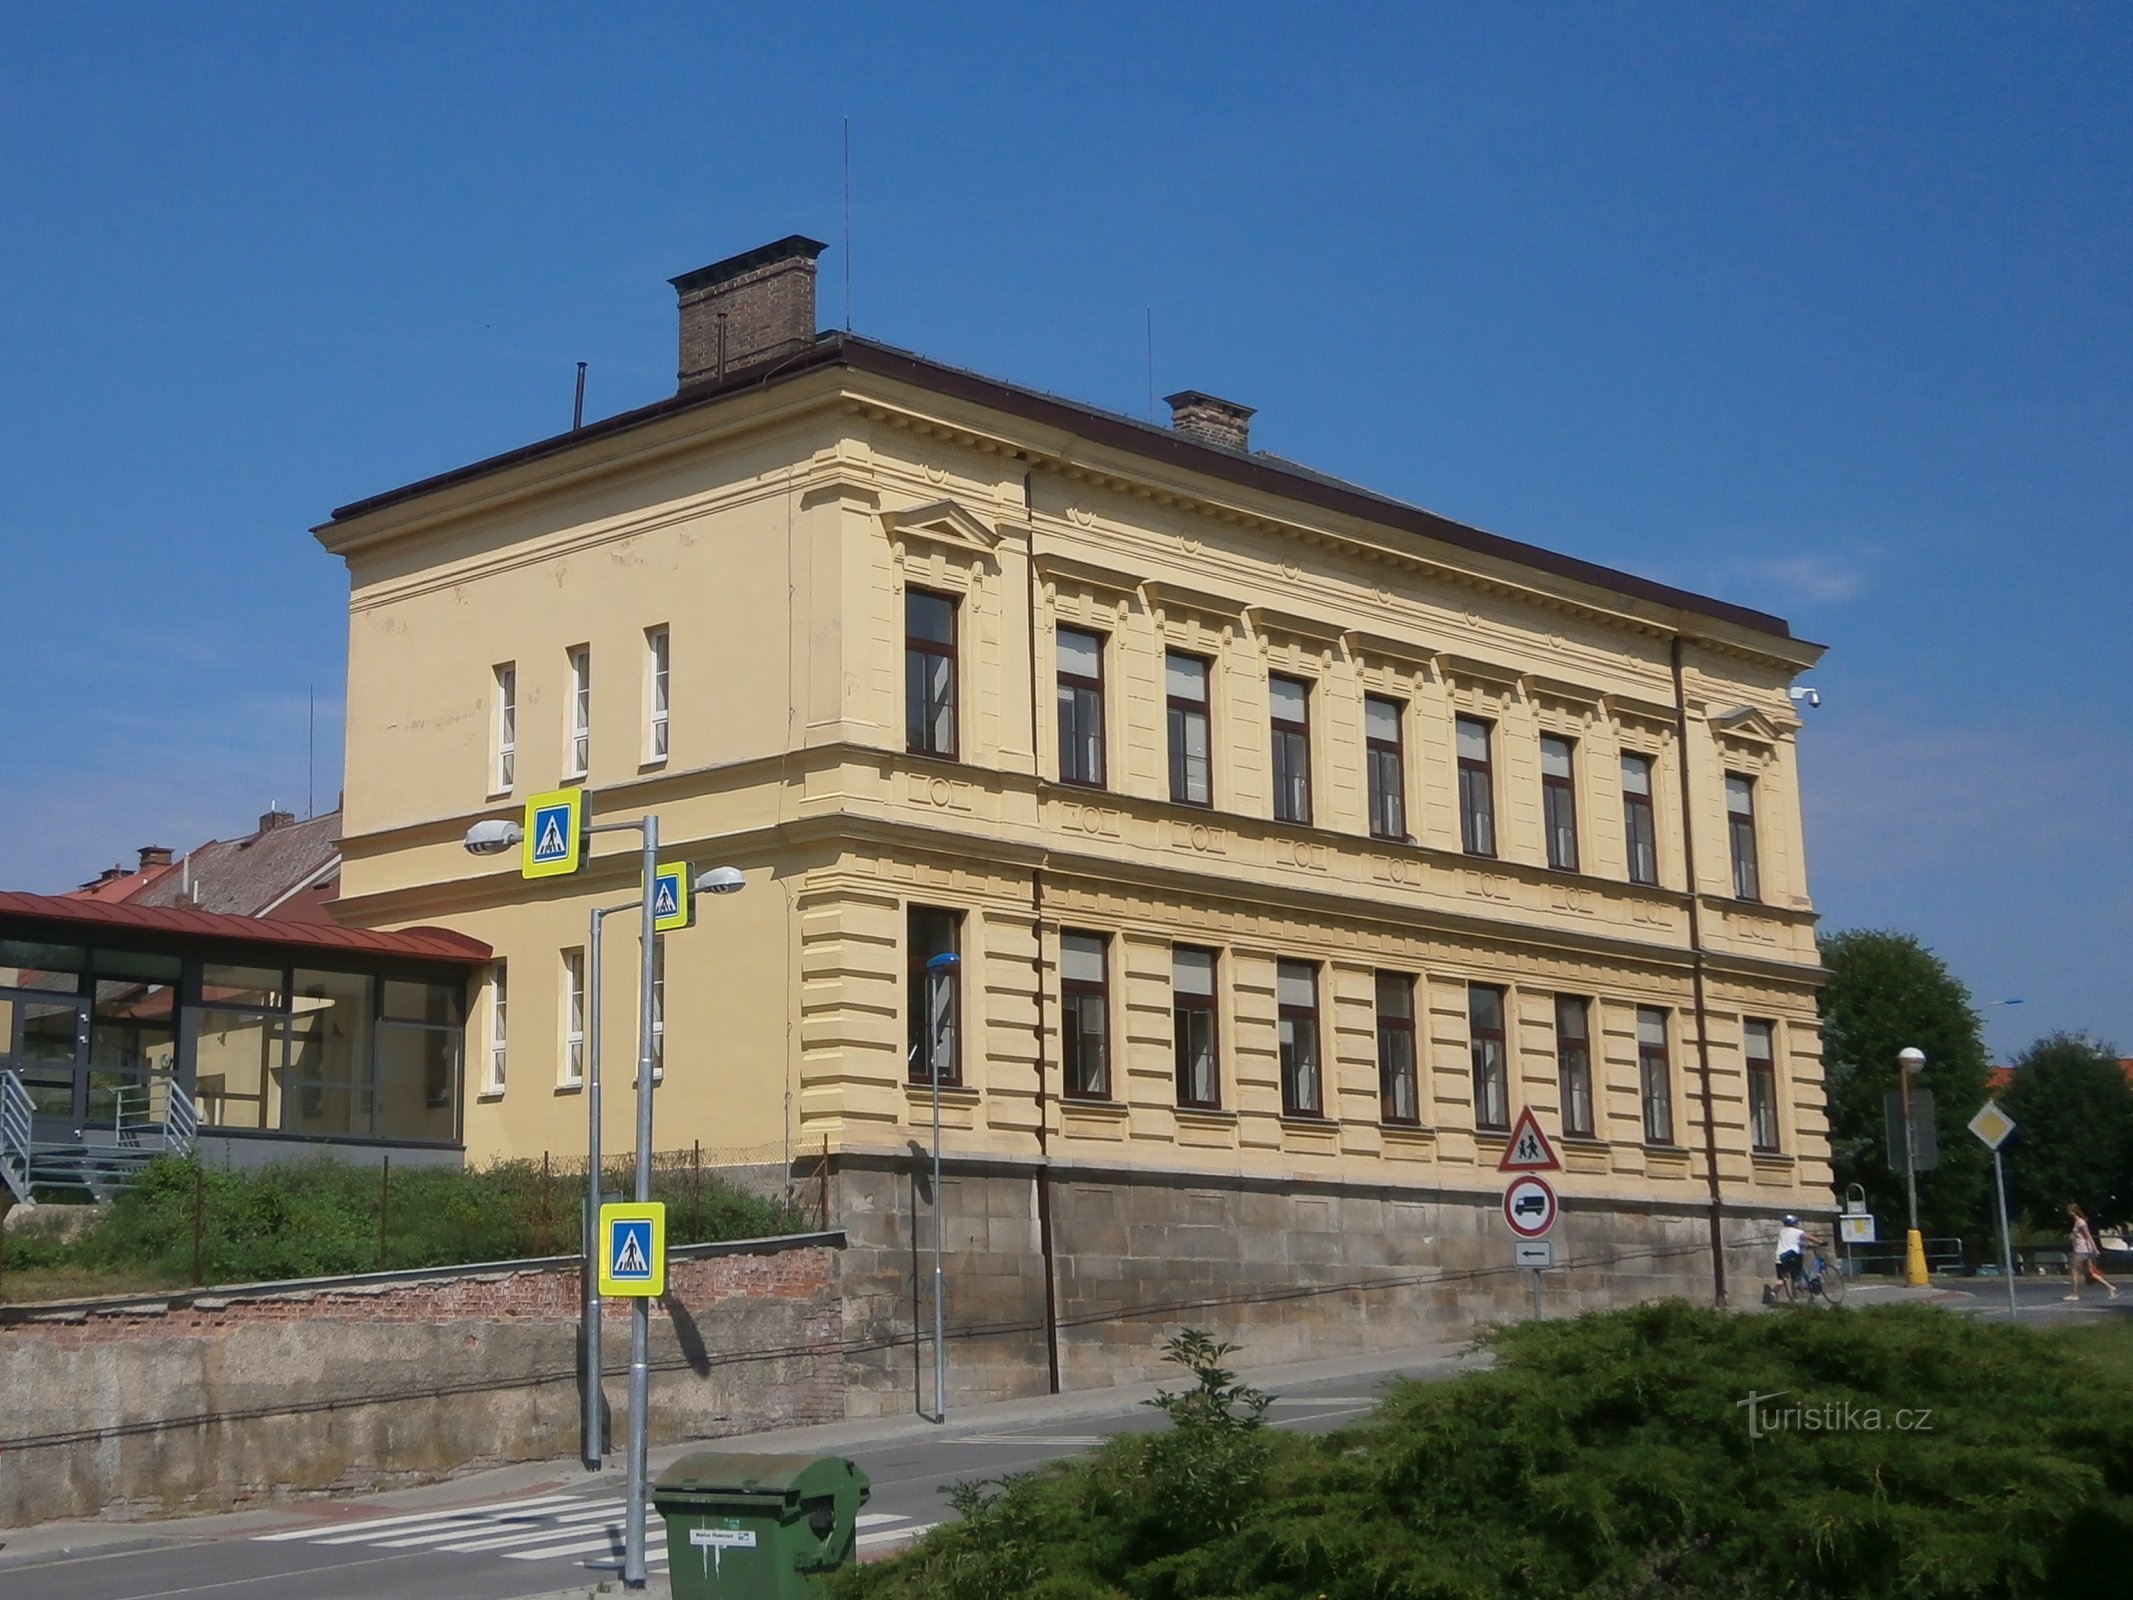 Ancienne école municipale n° 43-44 (Česká Skalice, 5.7.2017 juillet XNUMX)